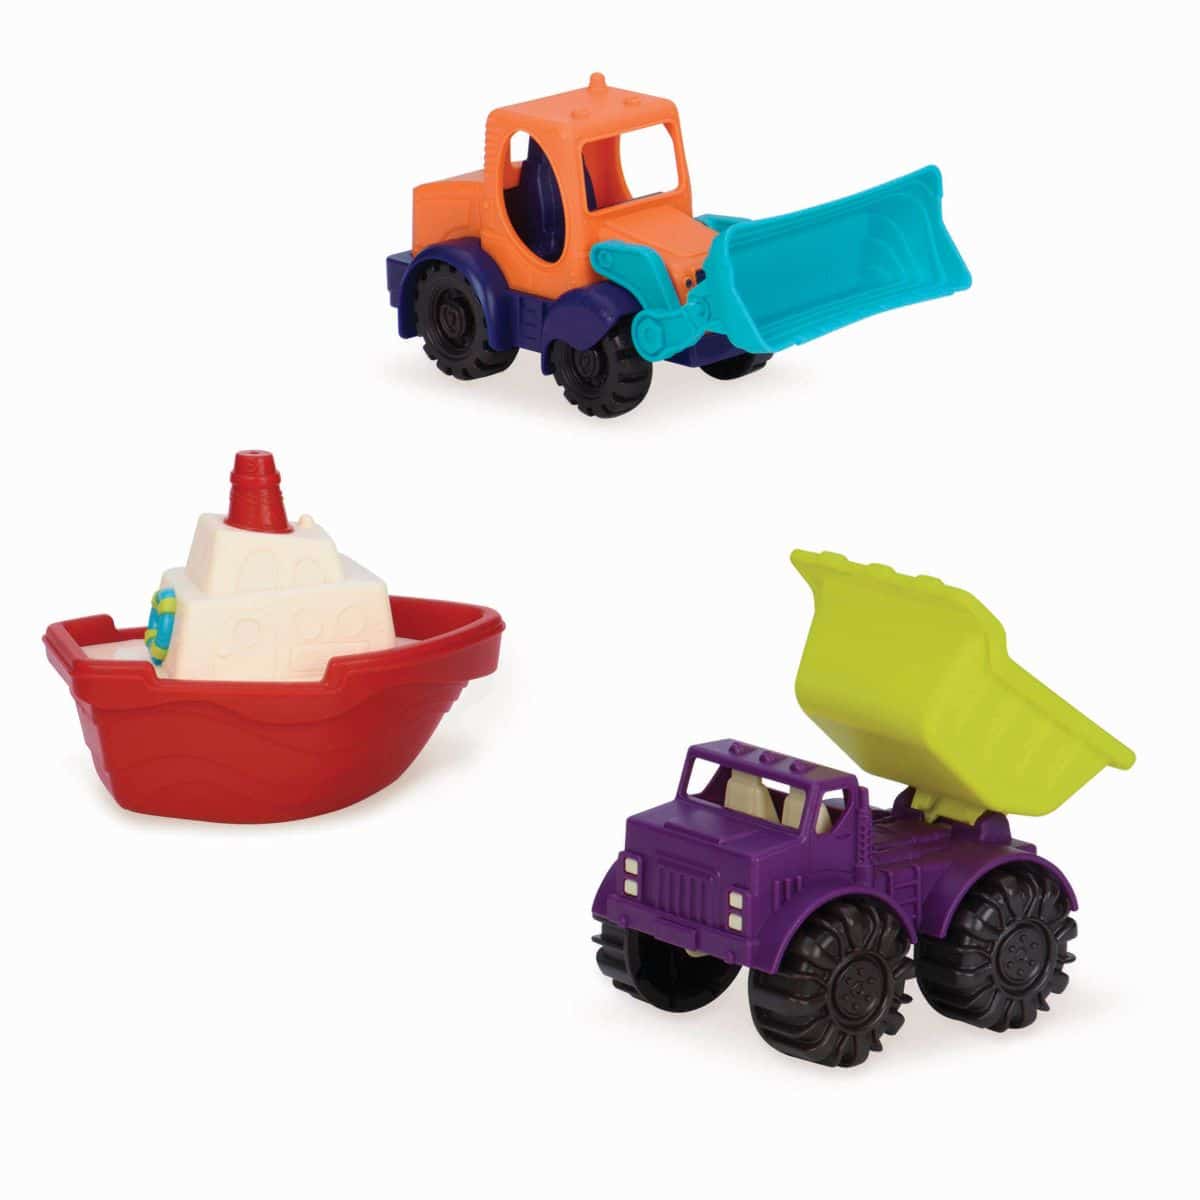 Mini toy trucks and boat.